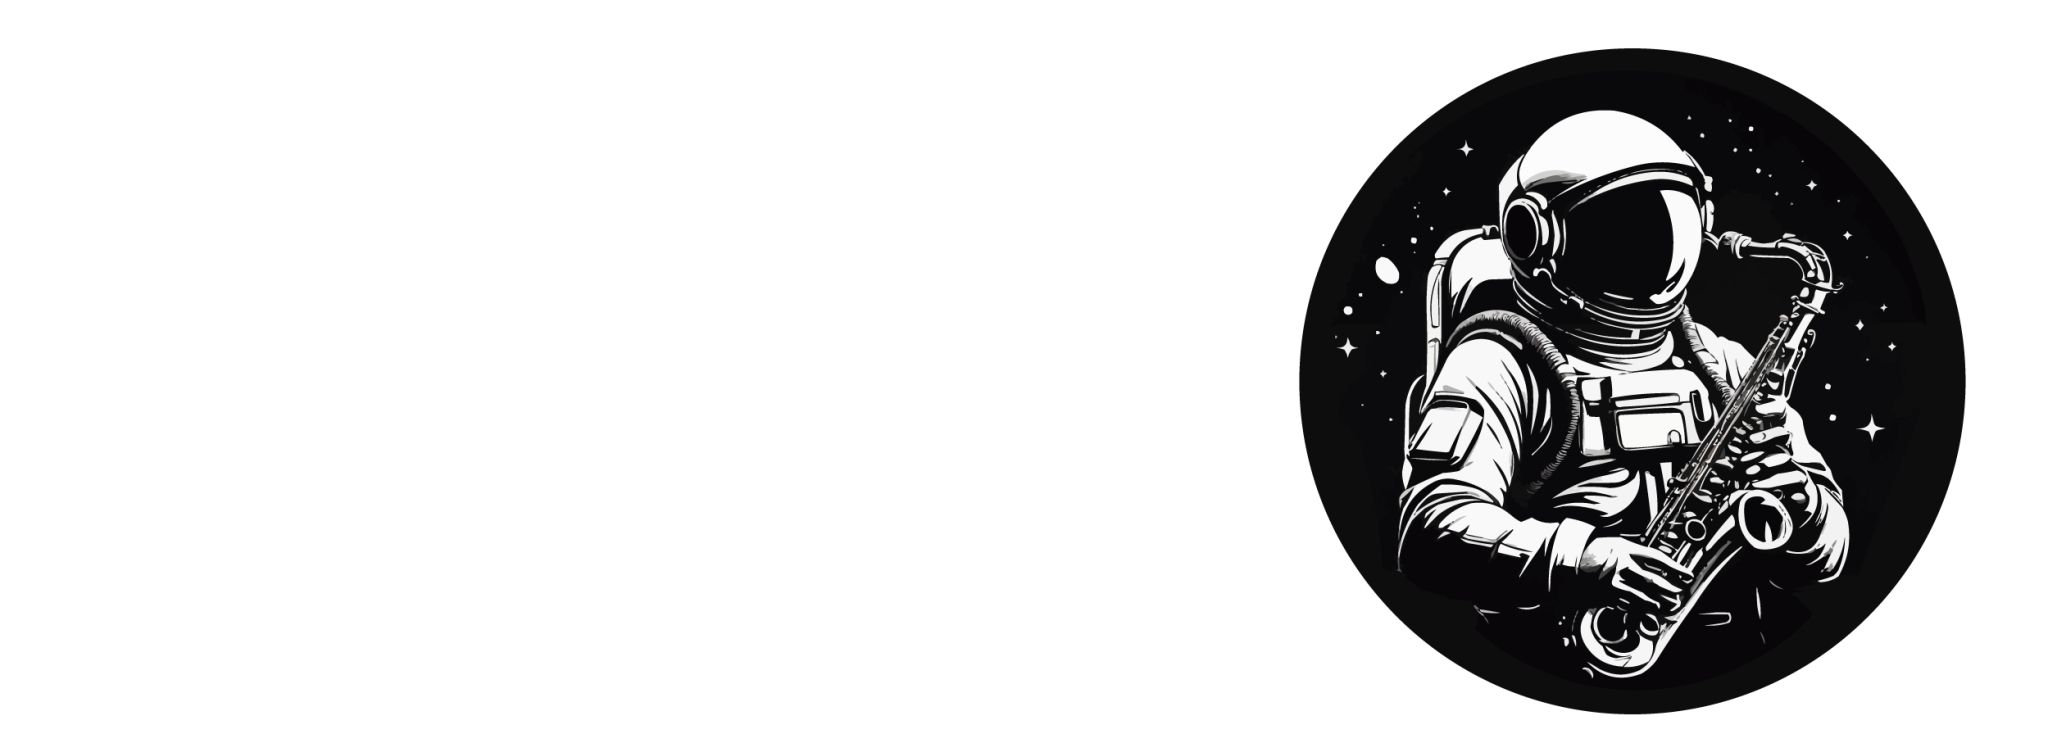 Armstrong Jazz House Logo